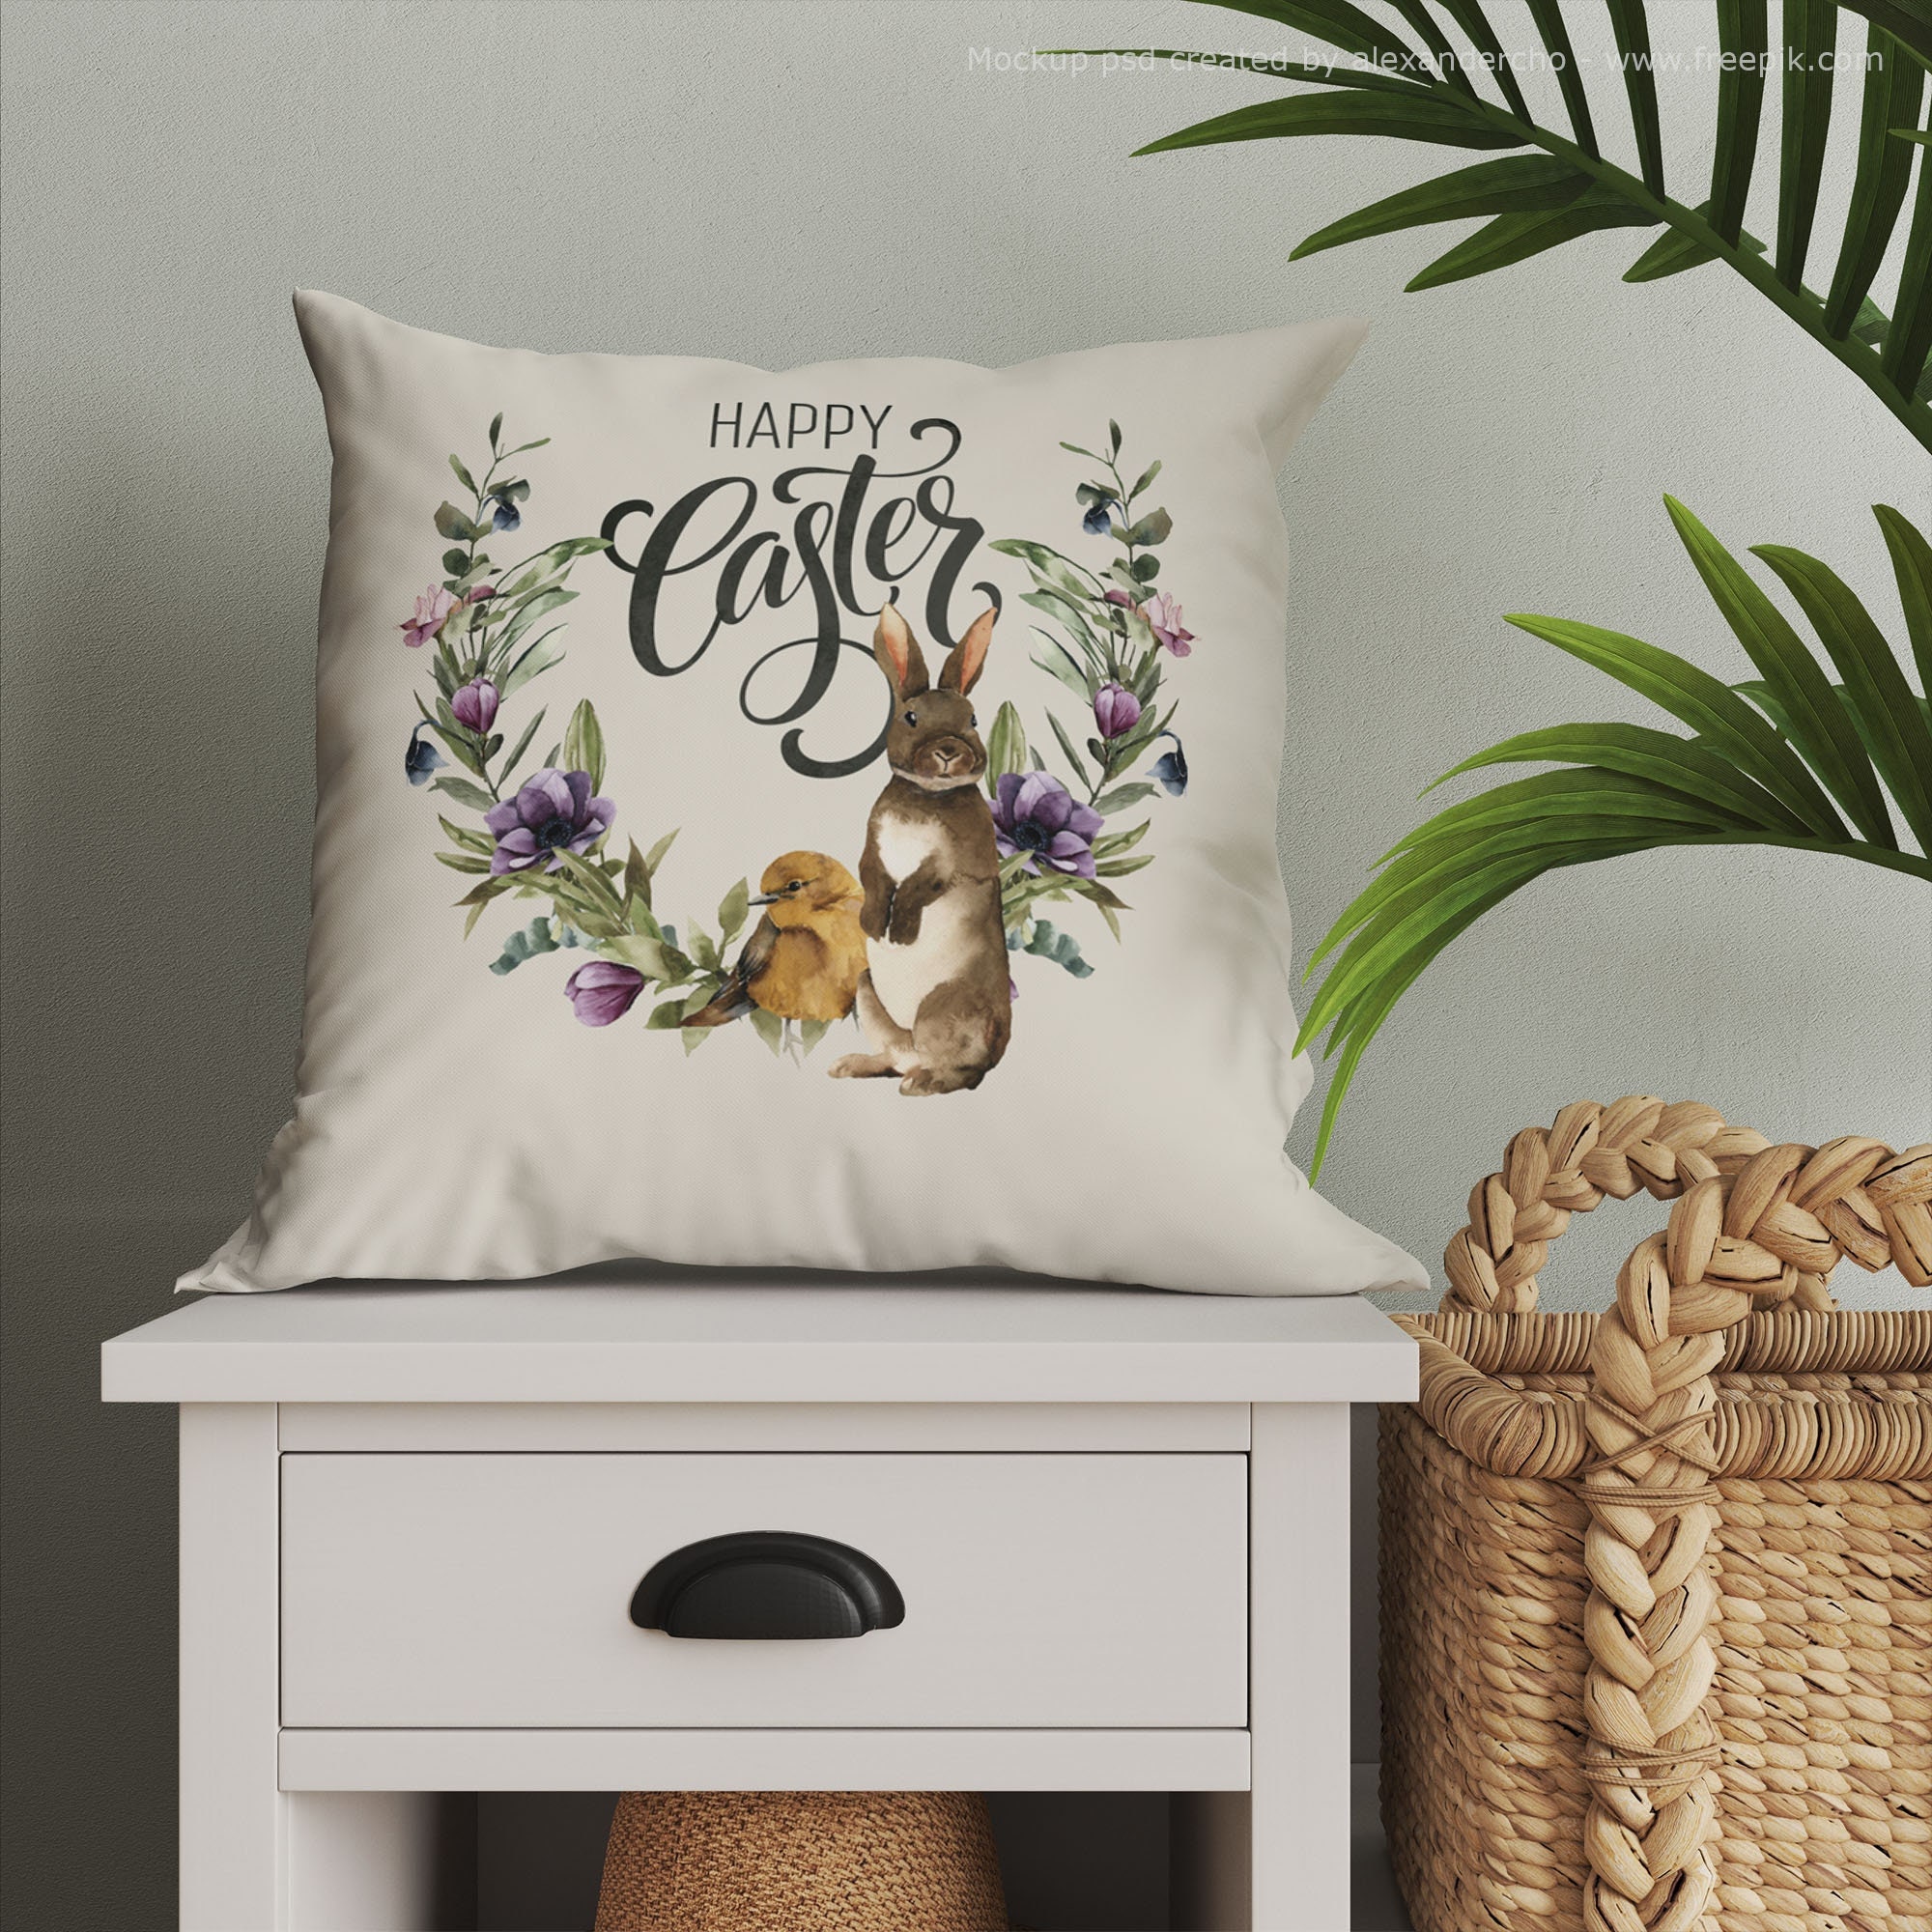 Bunny decorative pillow cover